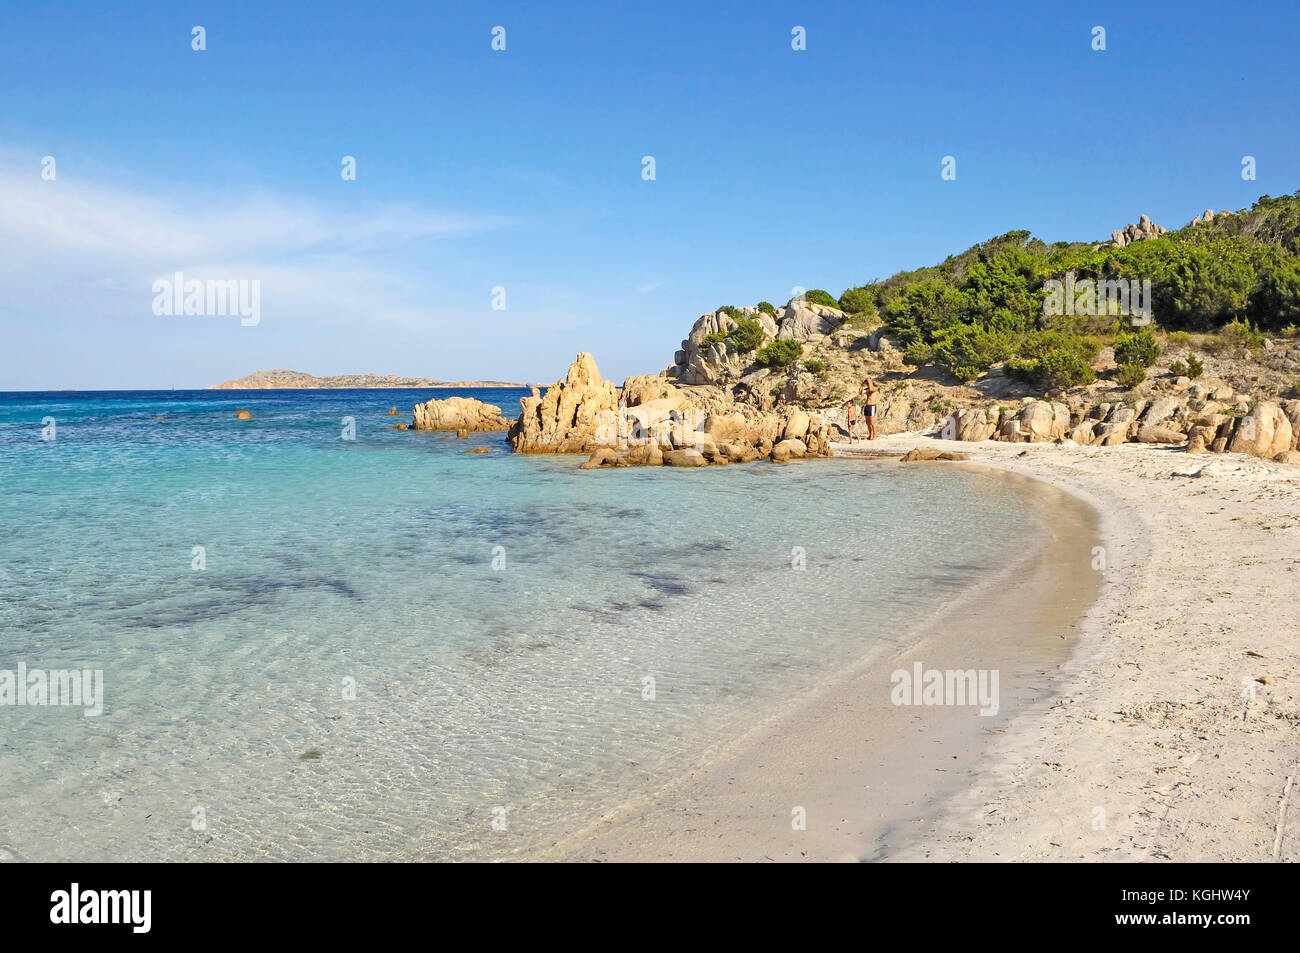 the spiaggia del Principe beach, Sardinia, Italy Stock Photo